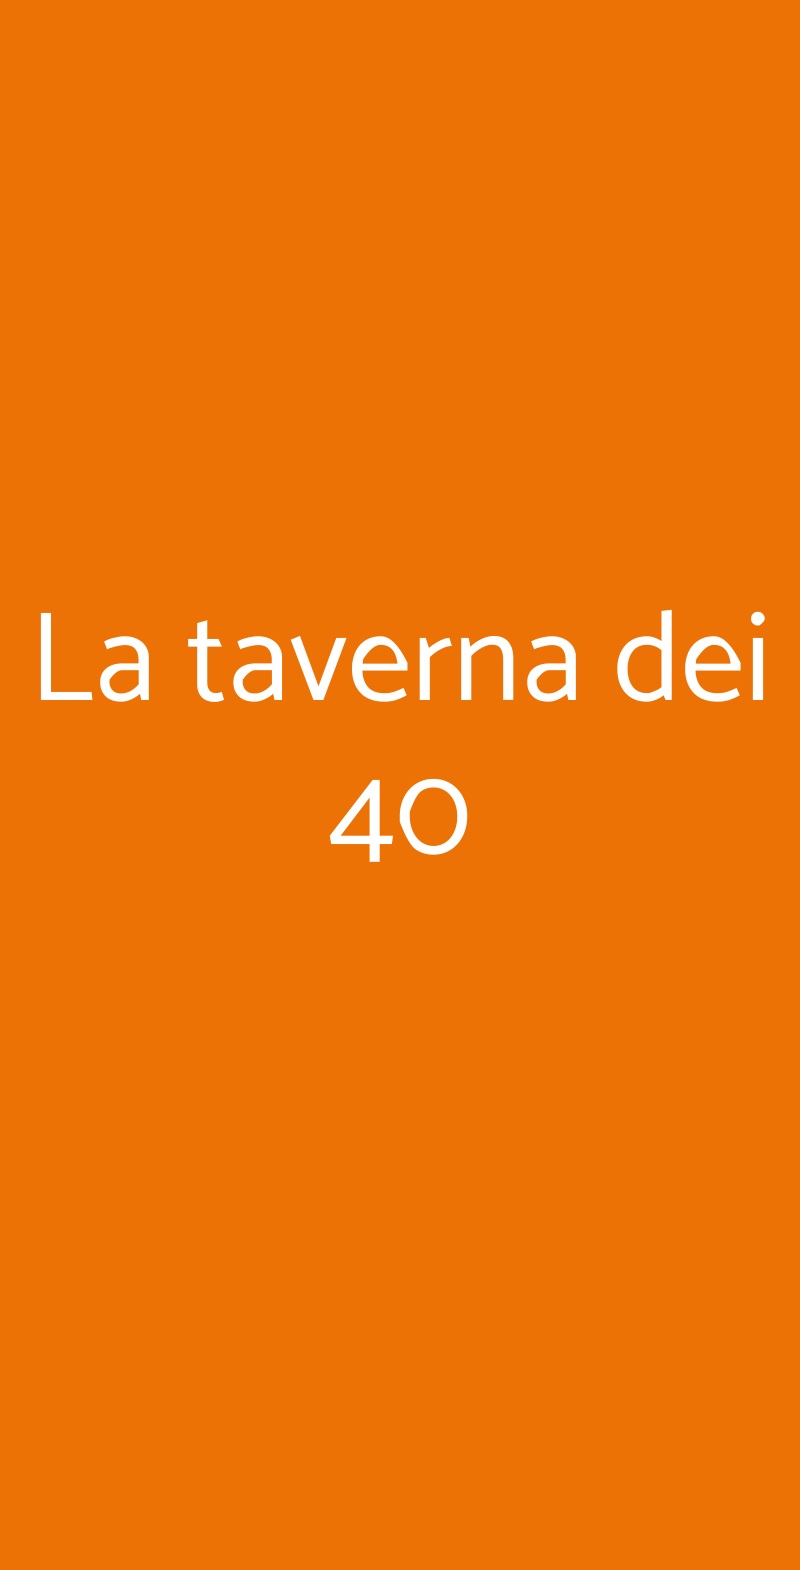 La taverna dei 40 Roma menù 1 pagina